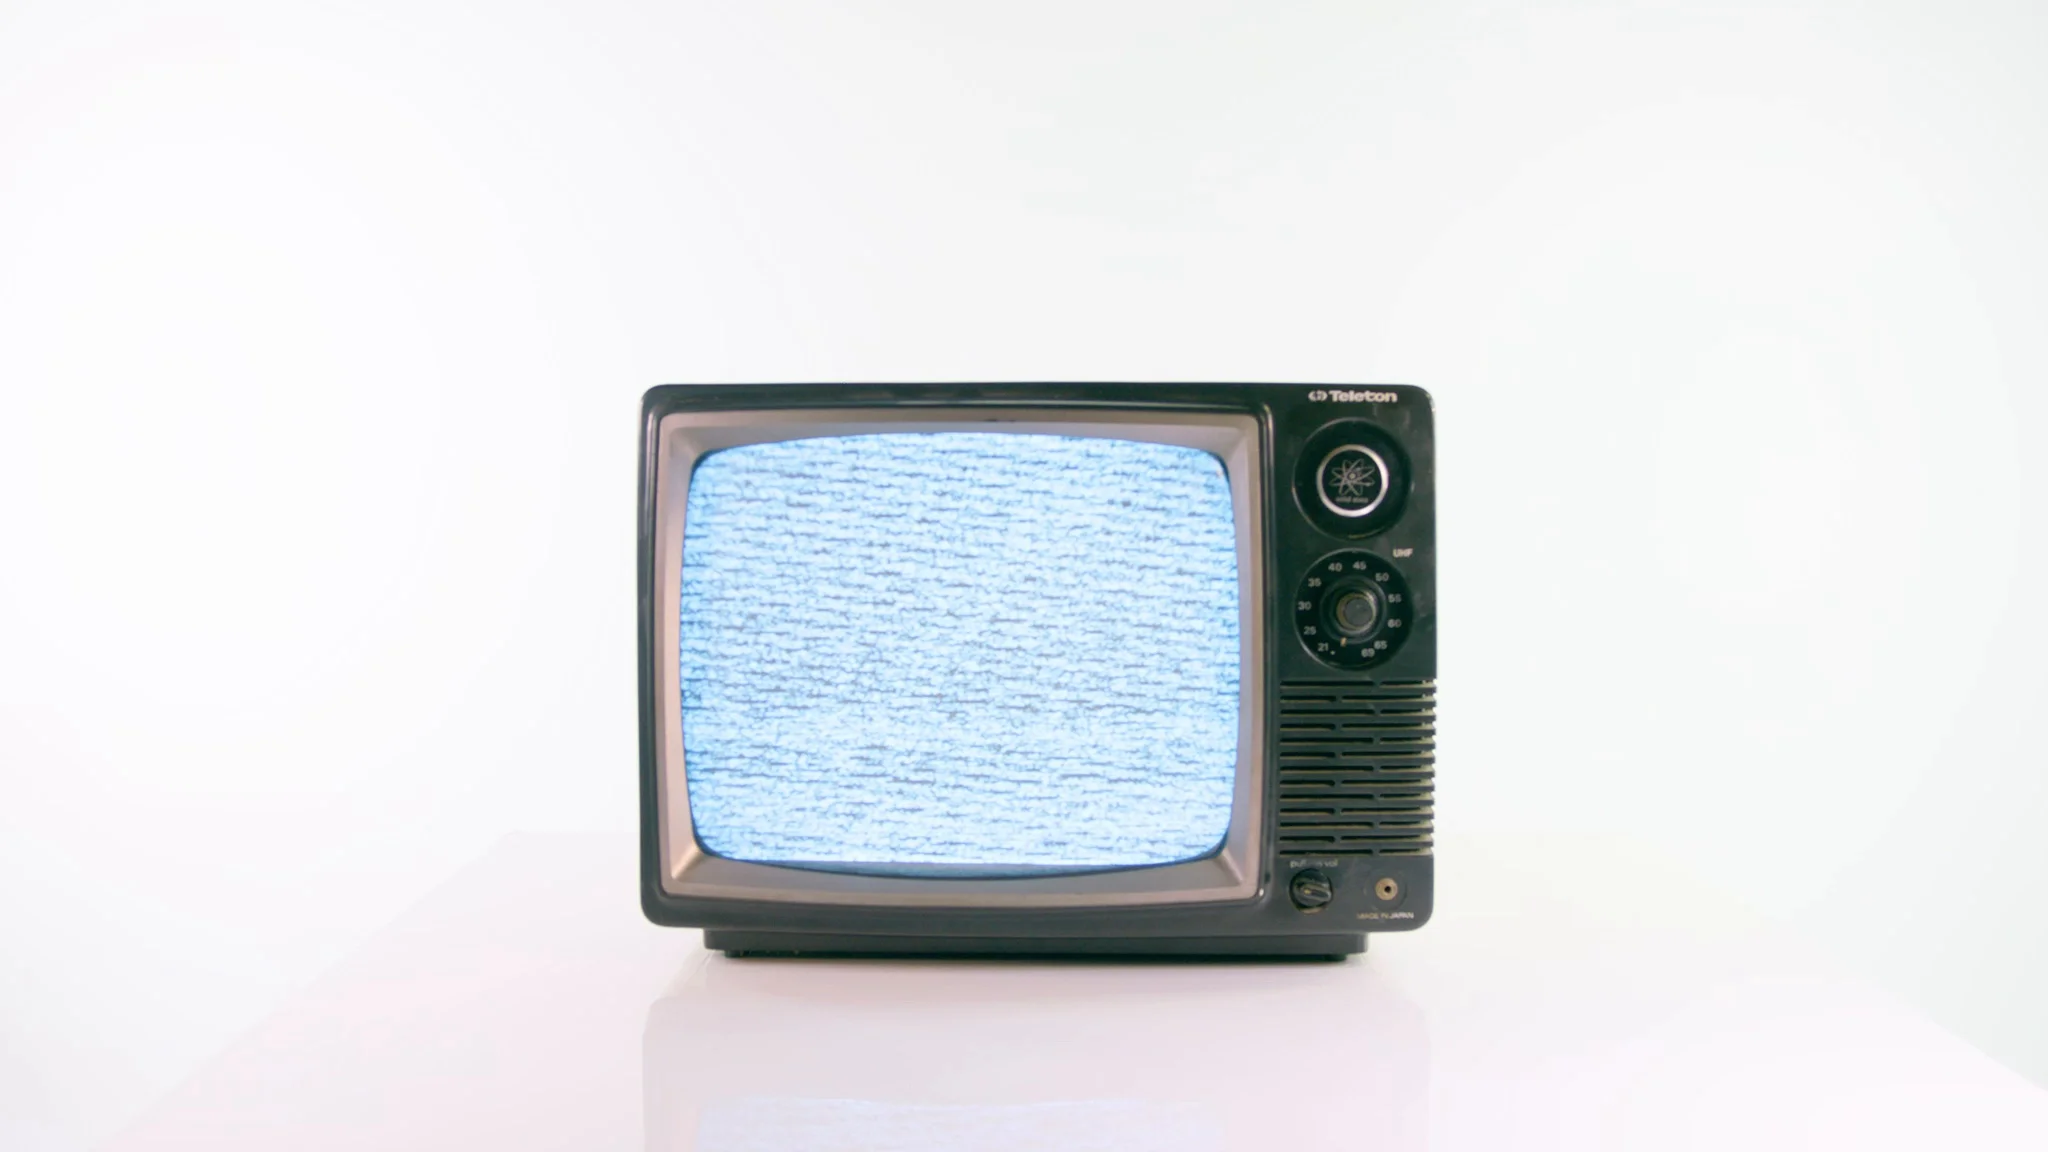 vintage tv static gif